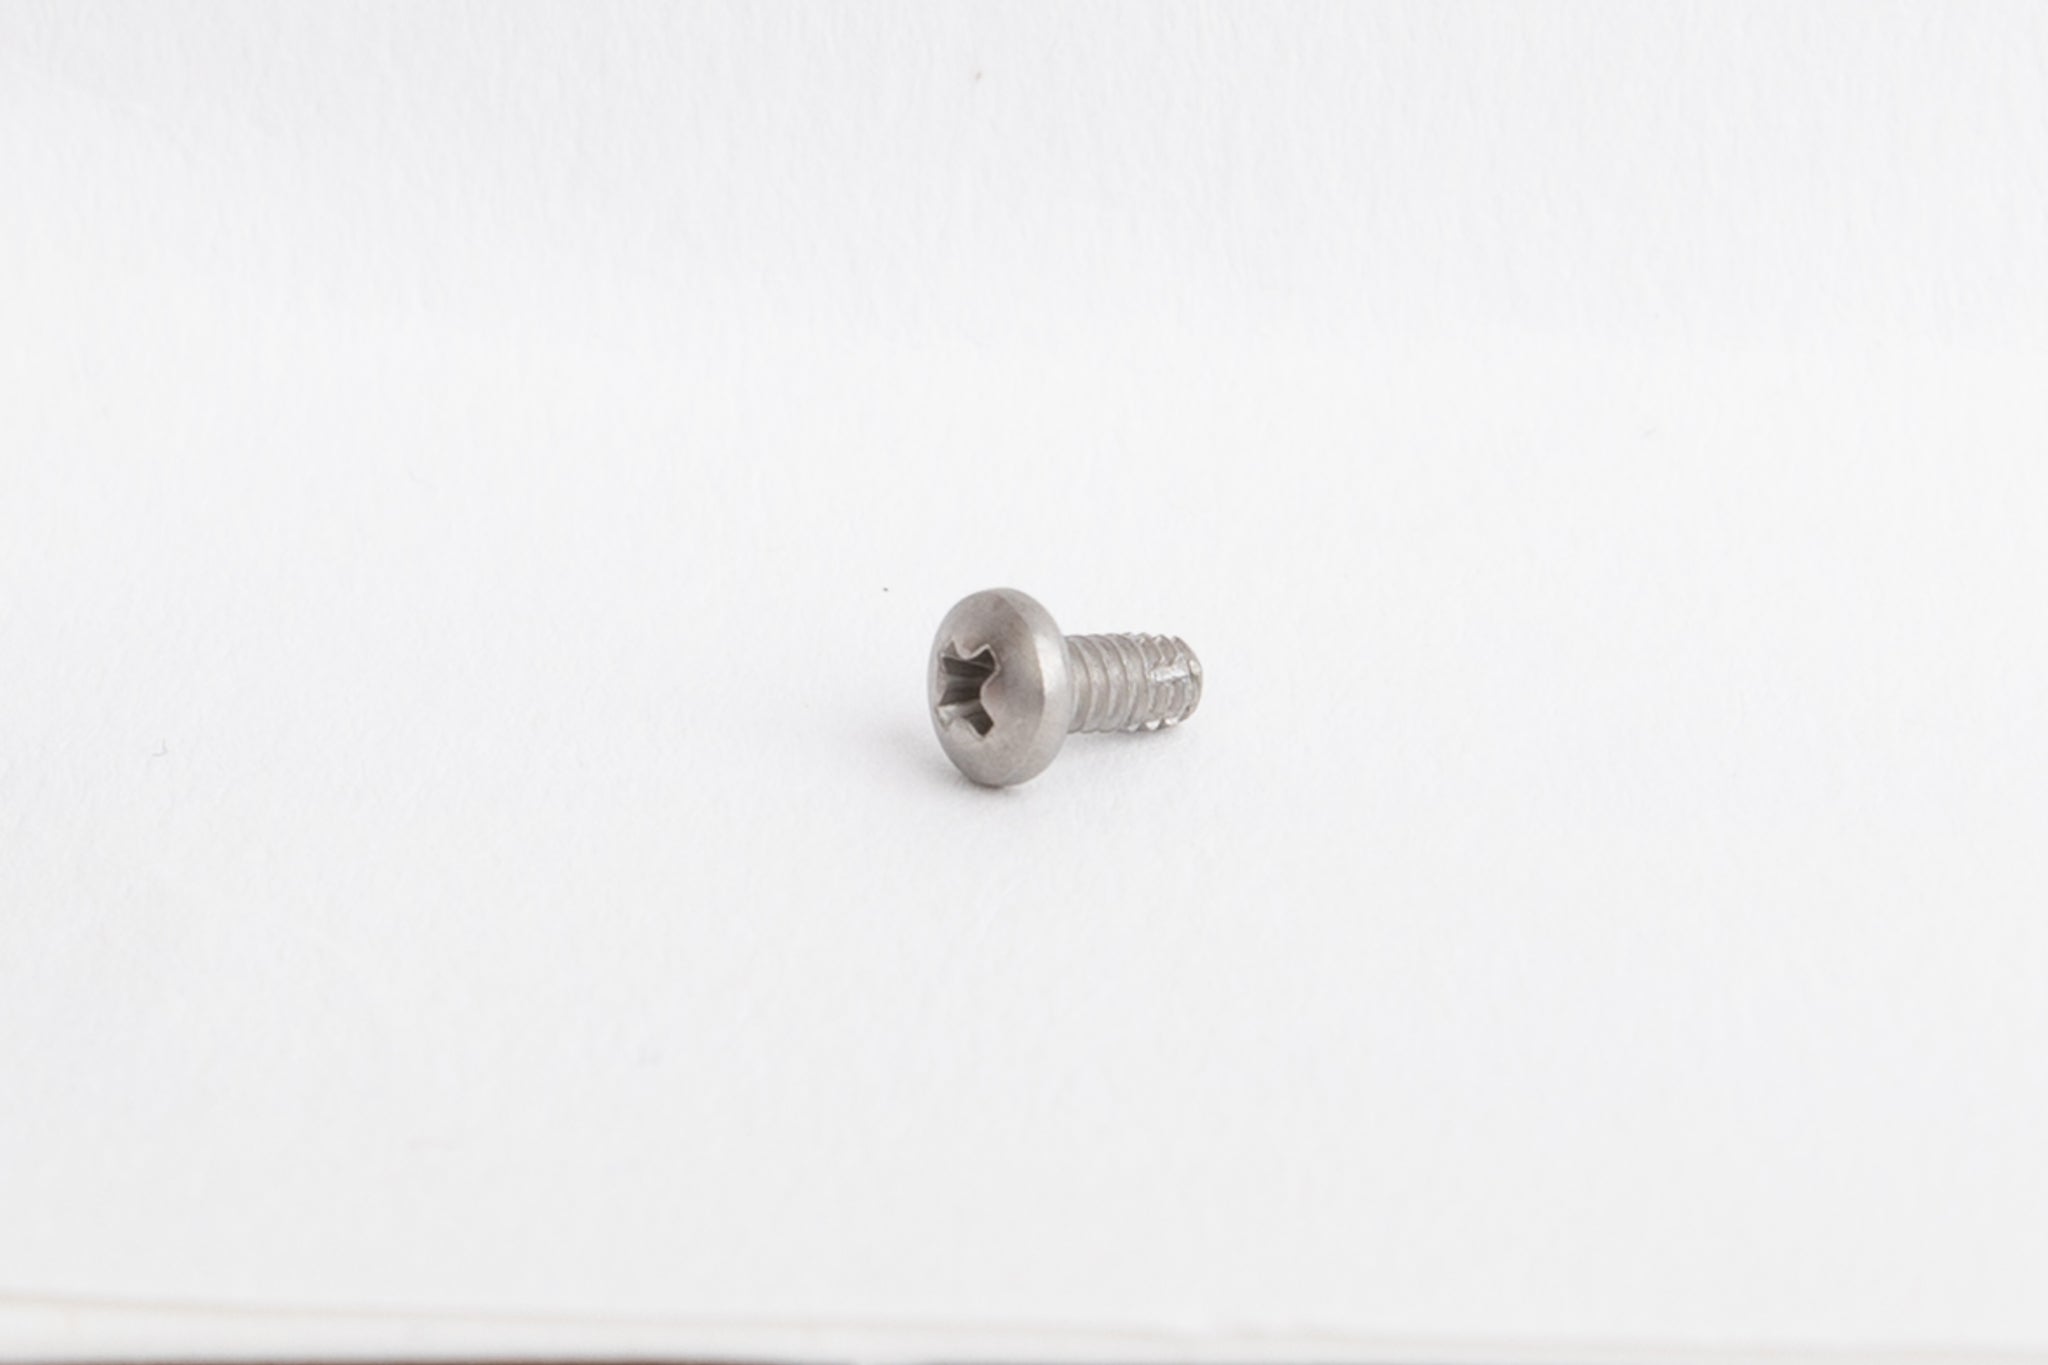 Picture of 4X40 x 1/4 phillips pan head screw